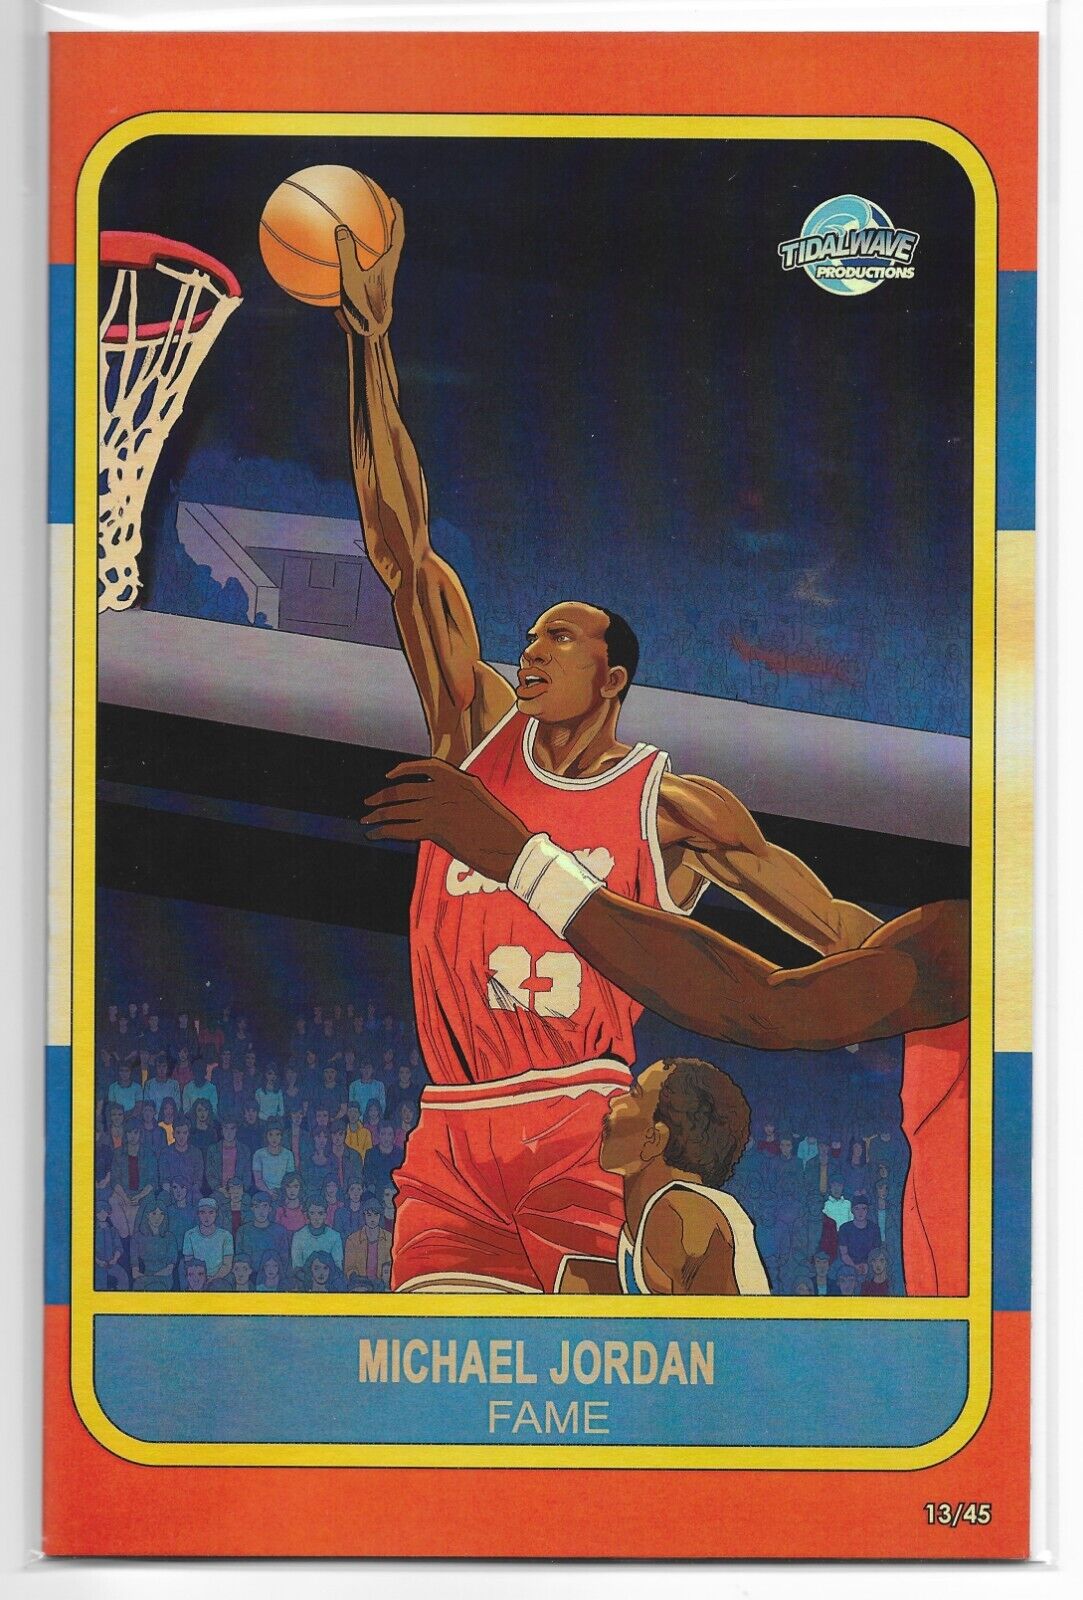 2024 Michael Jordan Fame 1 Comic 1986 Fleer Rookie Card Foil Variant RC 13/45